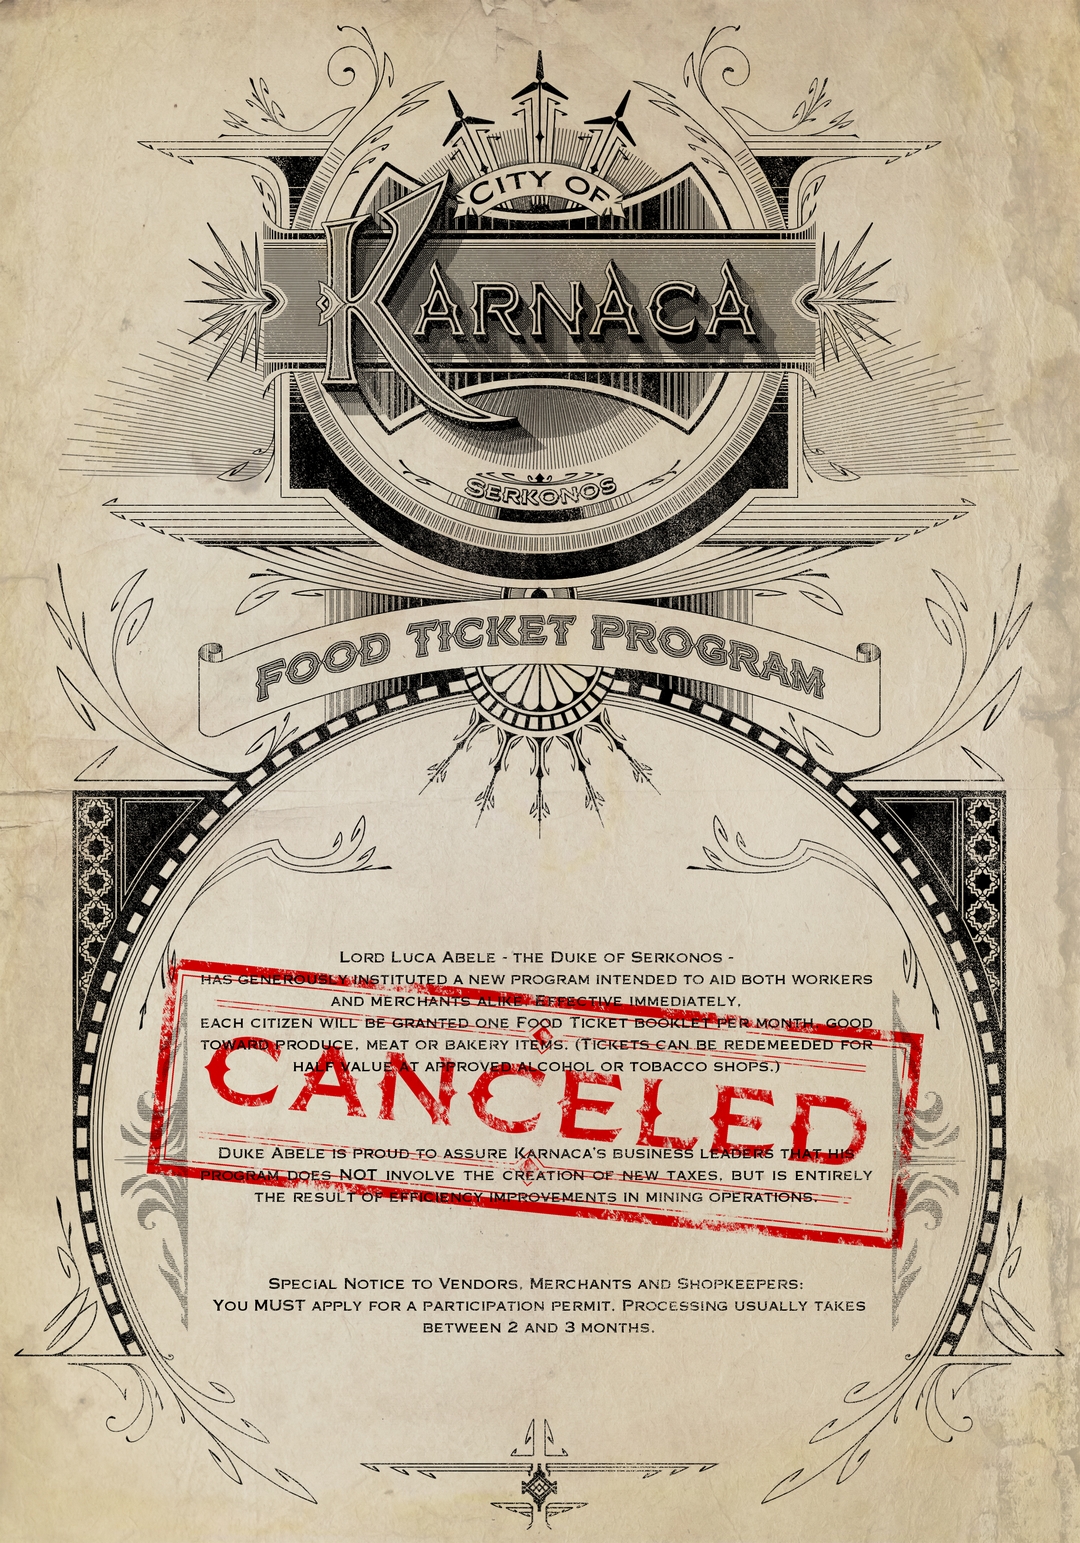 food-ticket-program-poster dishonored 2 artwork